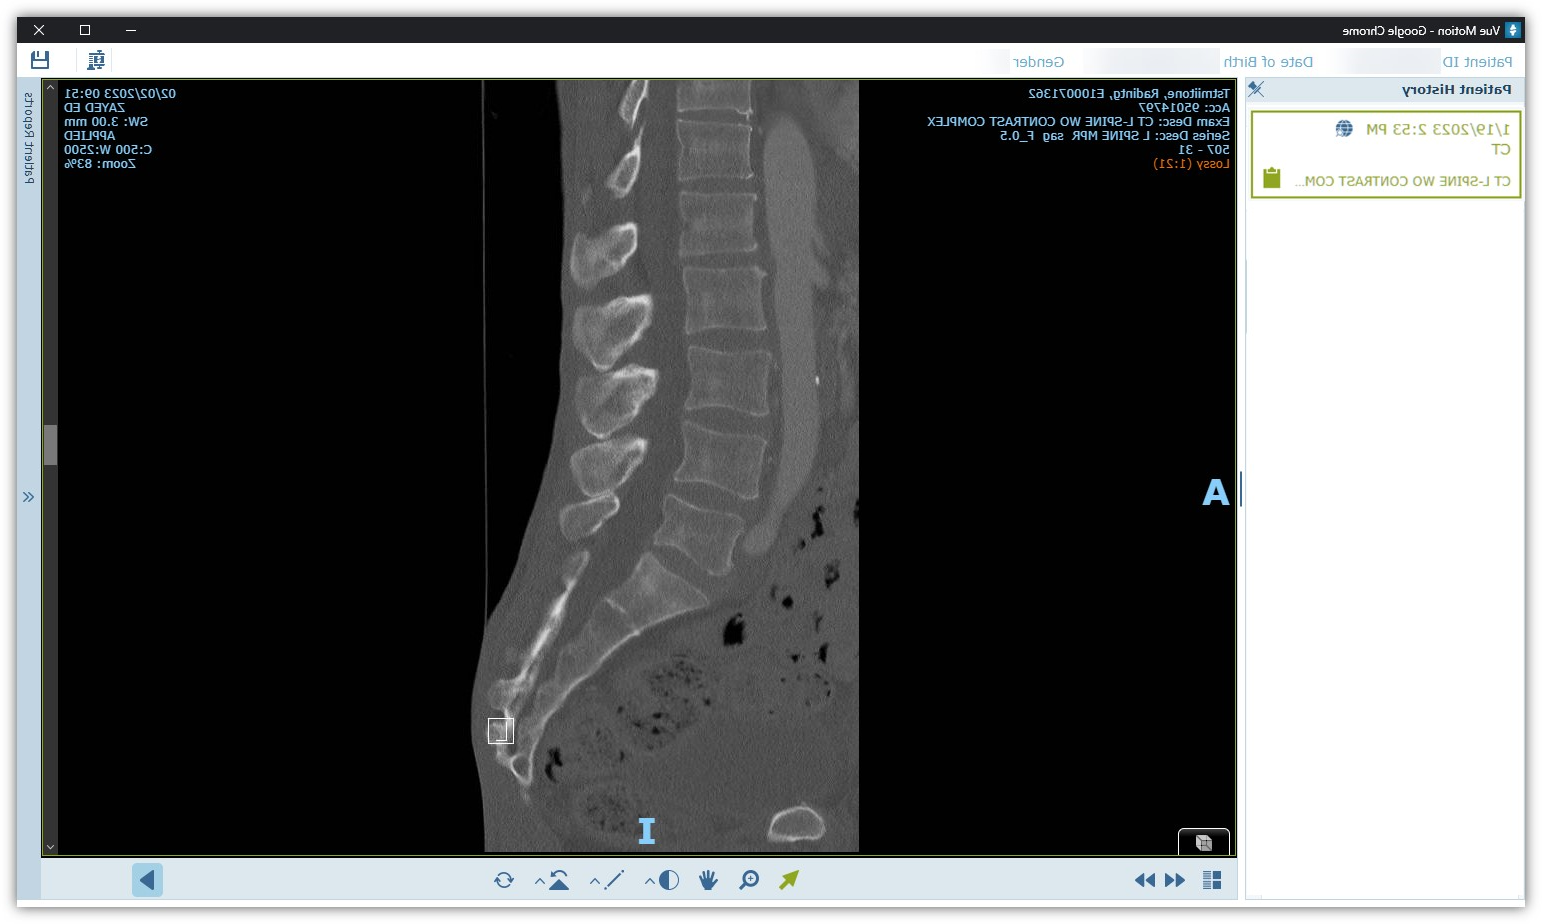 Screenshot of medical image